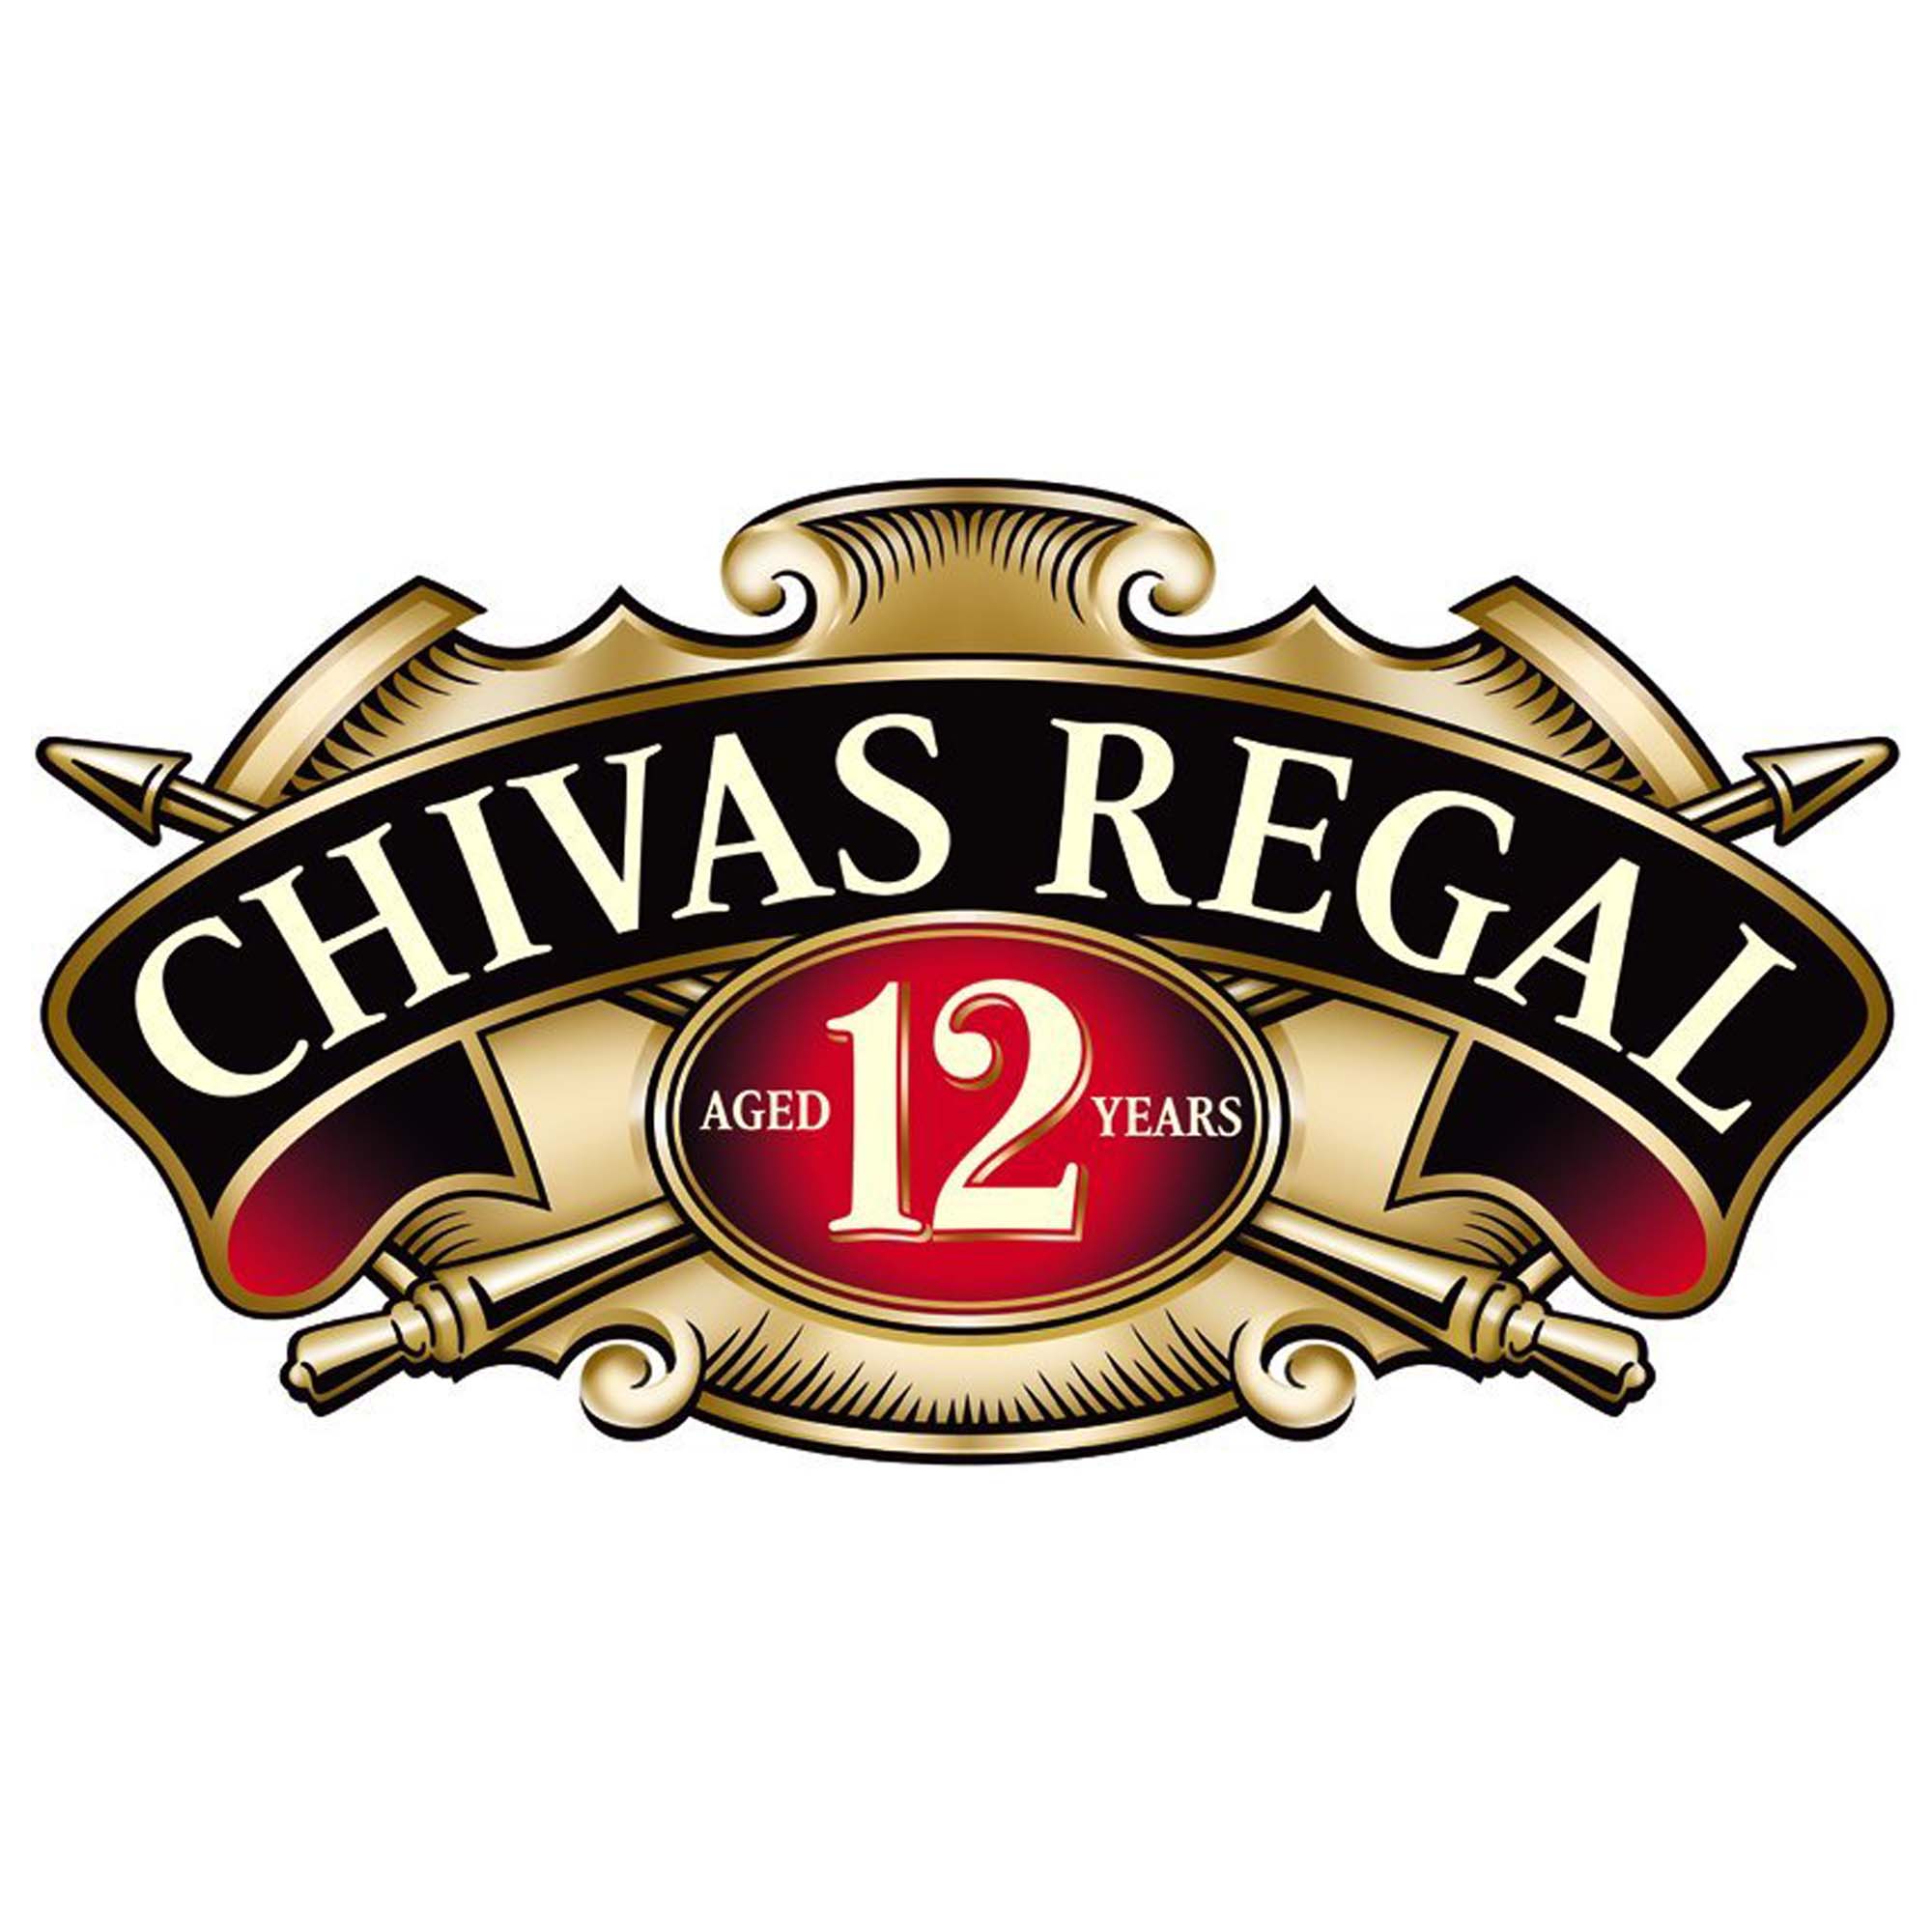 Aged 12 Years Logo - Chivas Regal Aged 12 Years Logo | BUZZERG